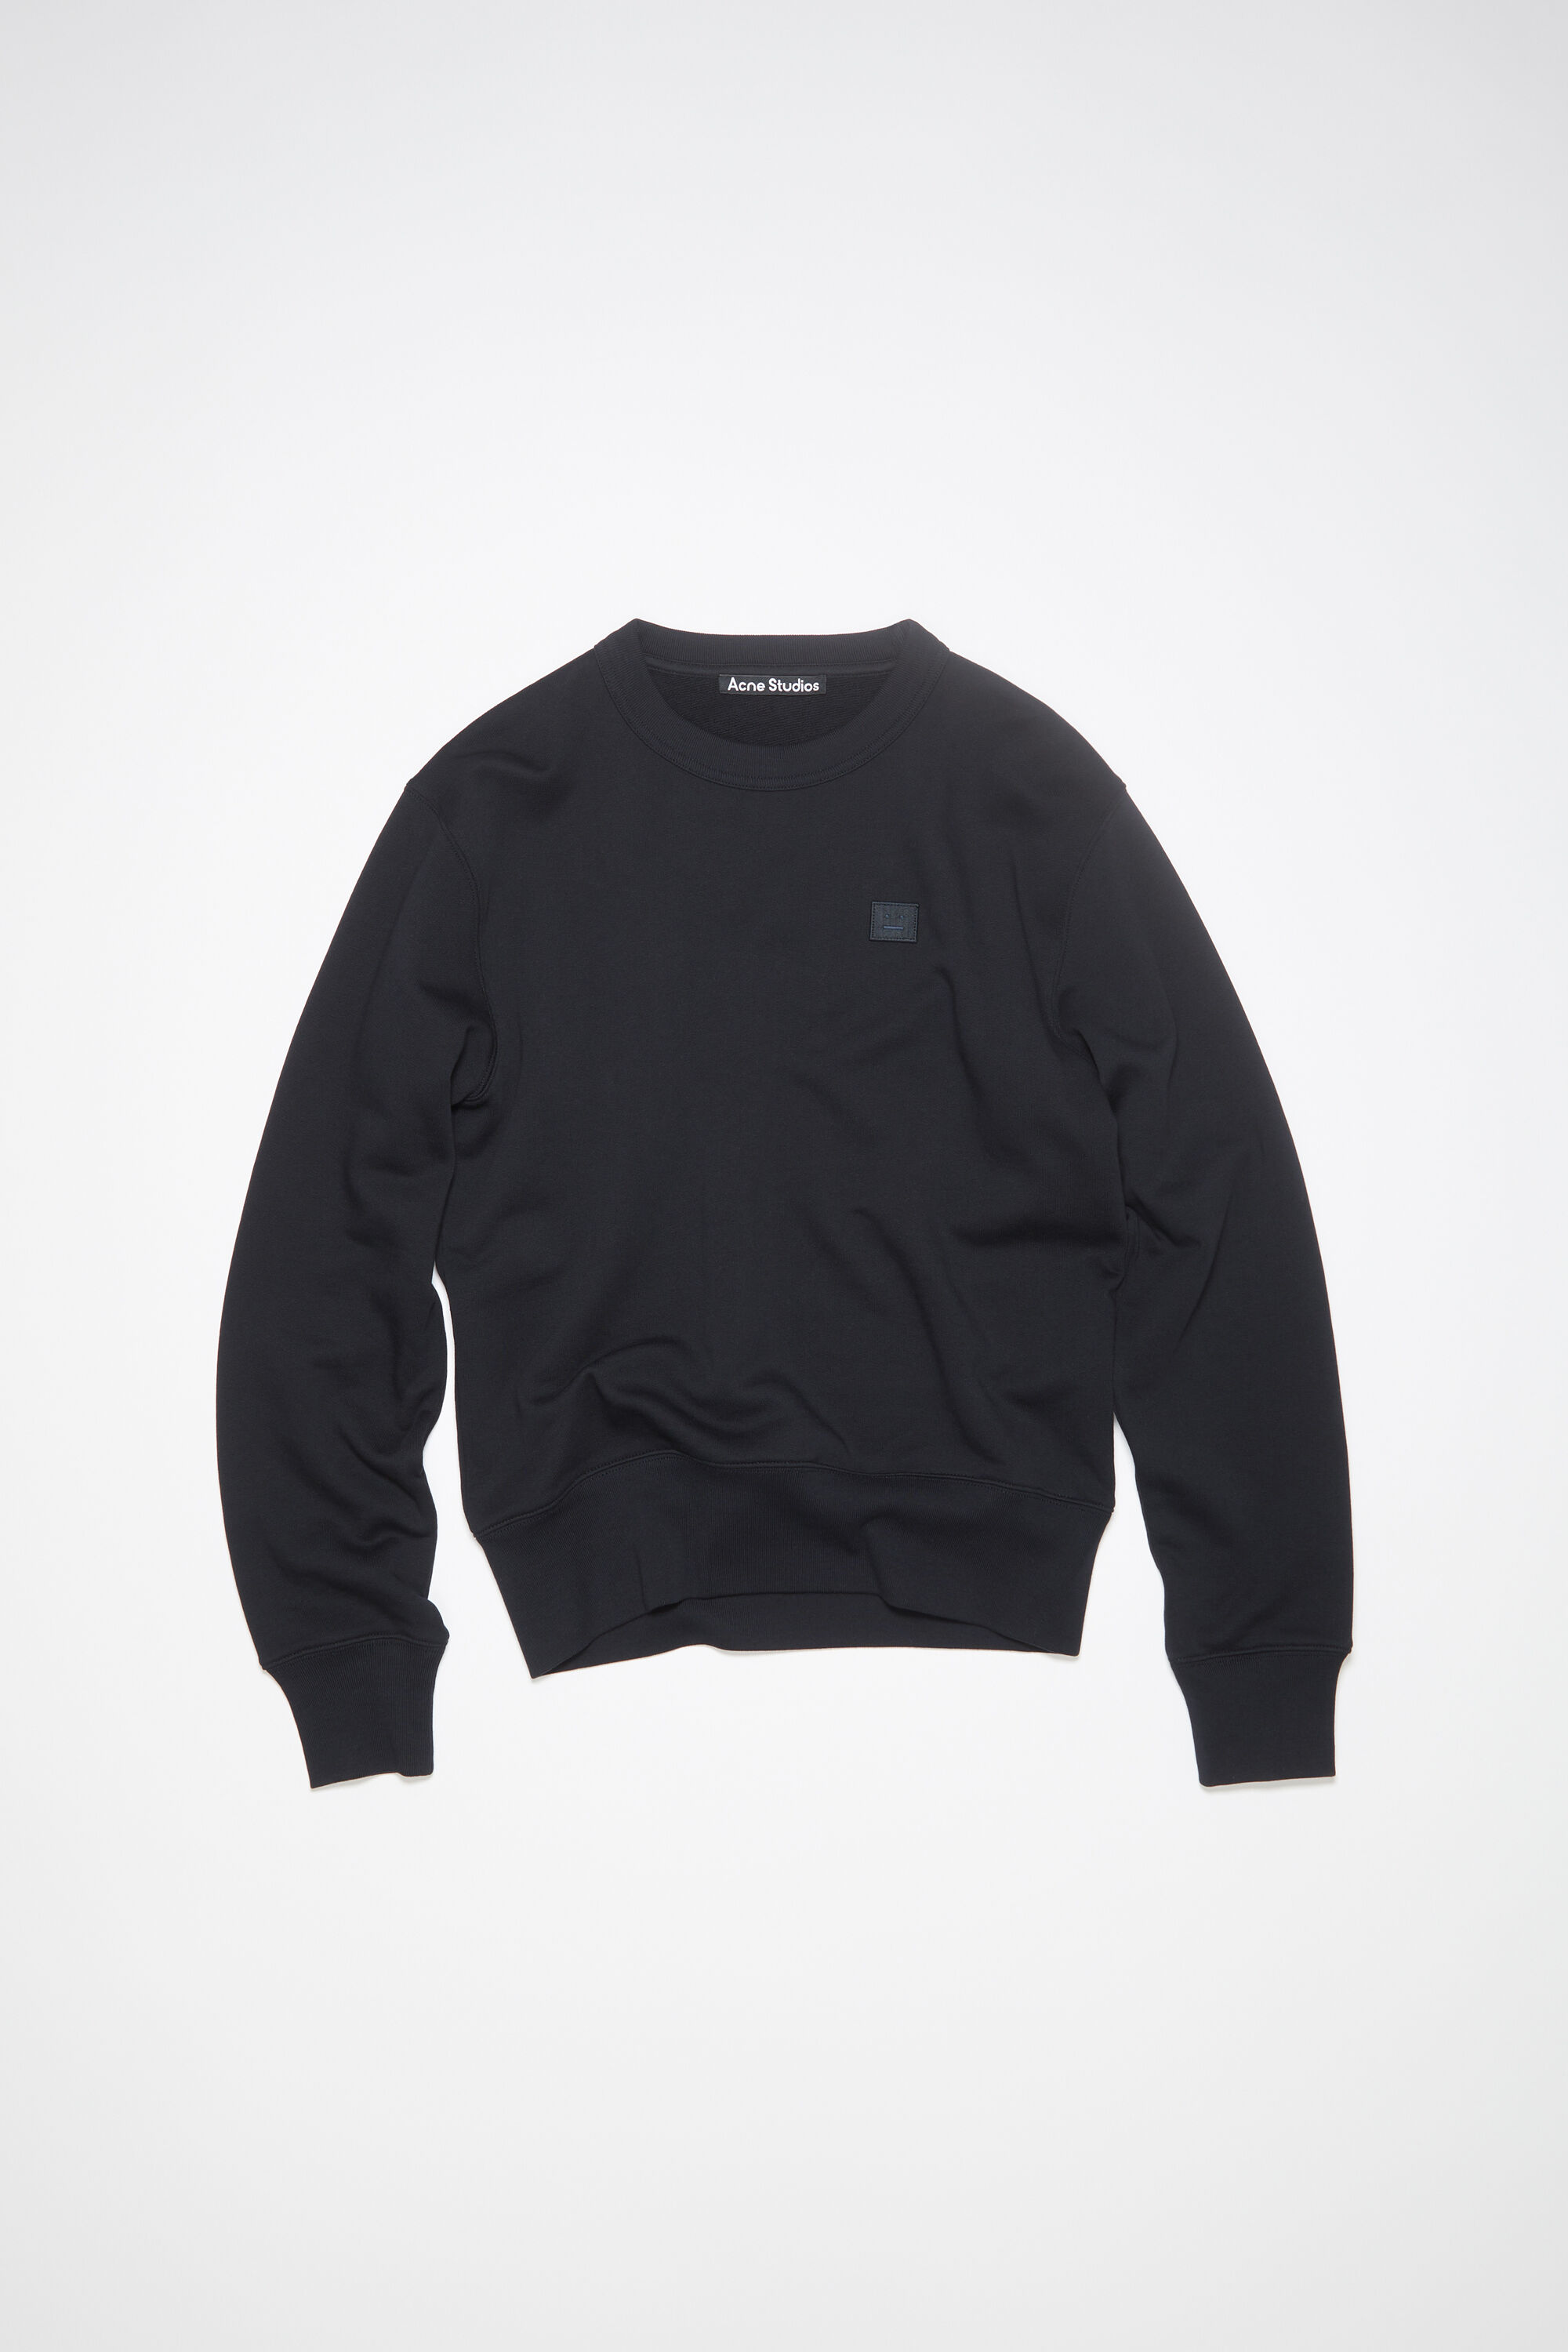 Acne Studios - Crew neck sweater - Regular fit - Black